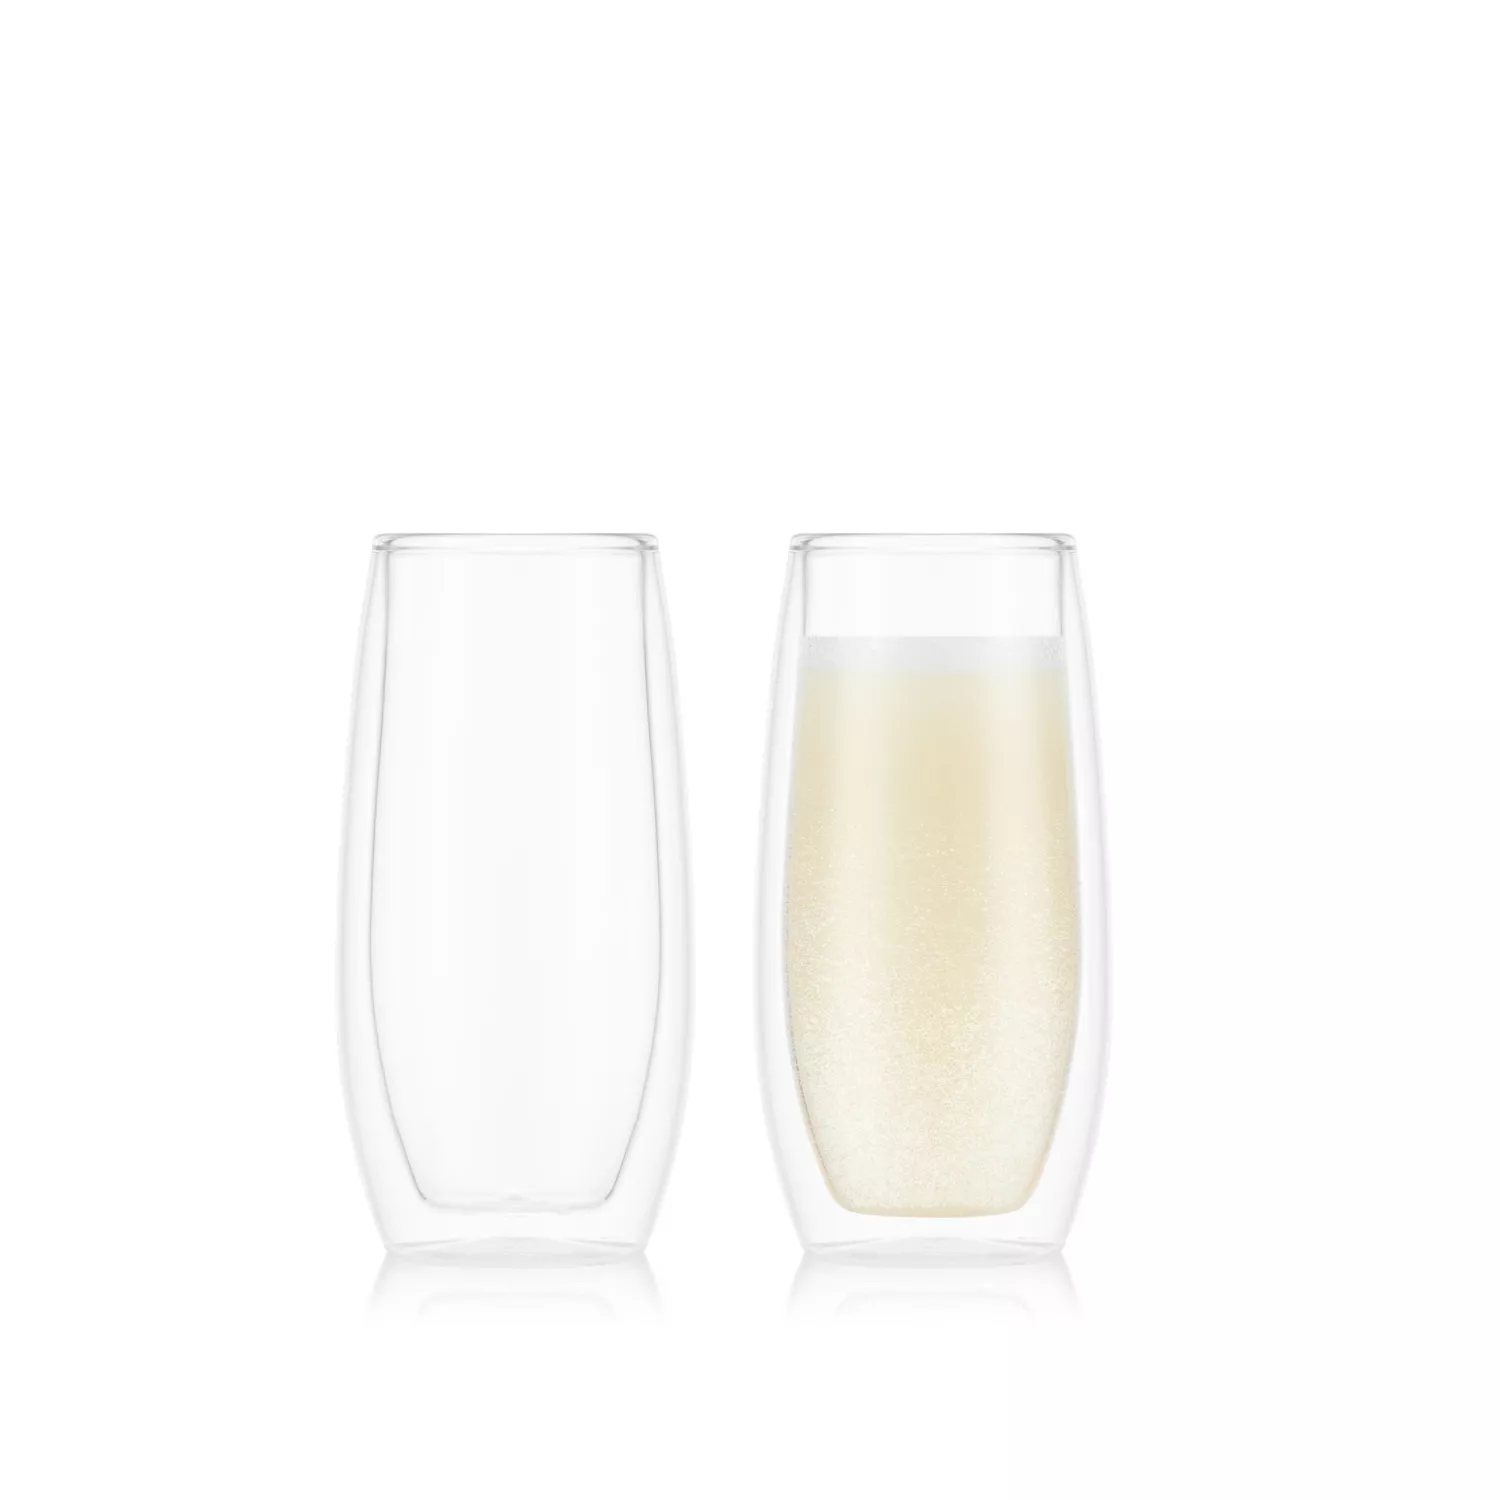 Bodum SKÅL Champagne Glass, Set of 2